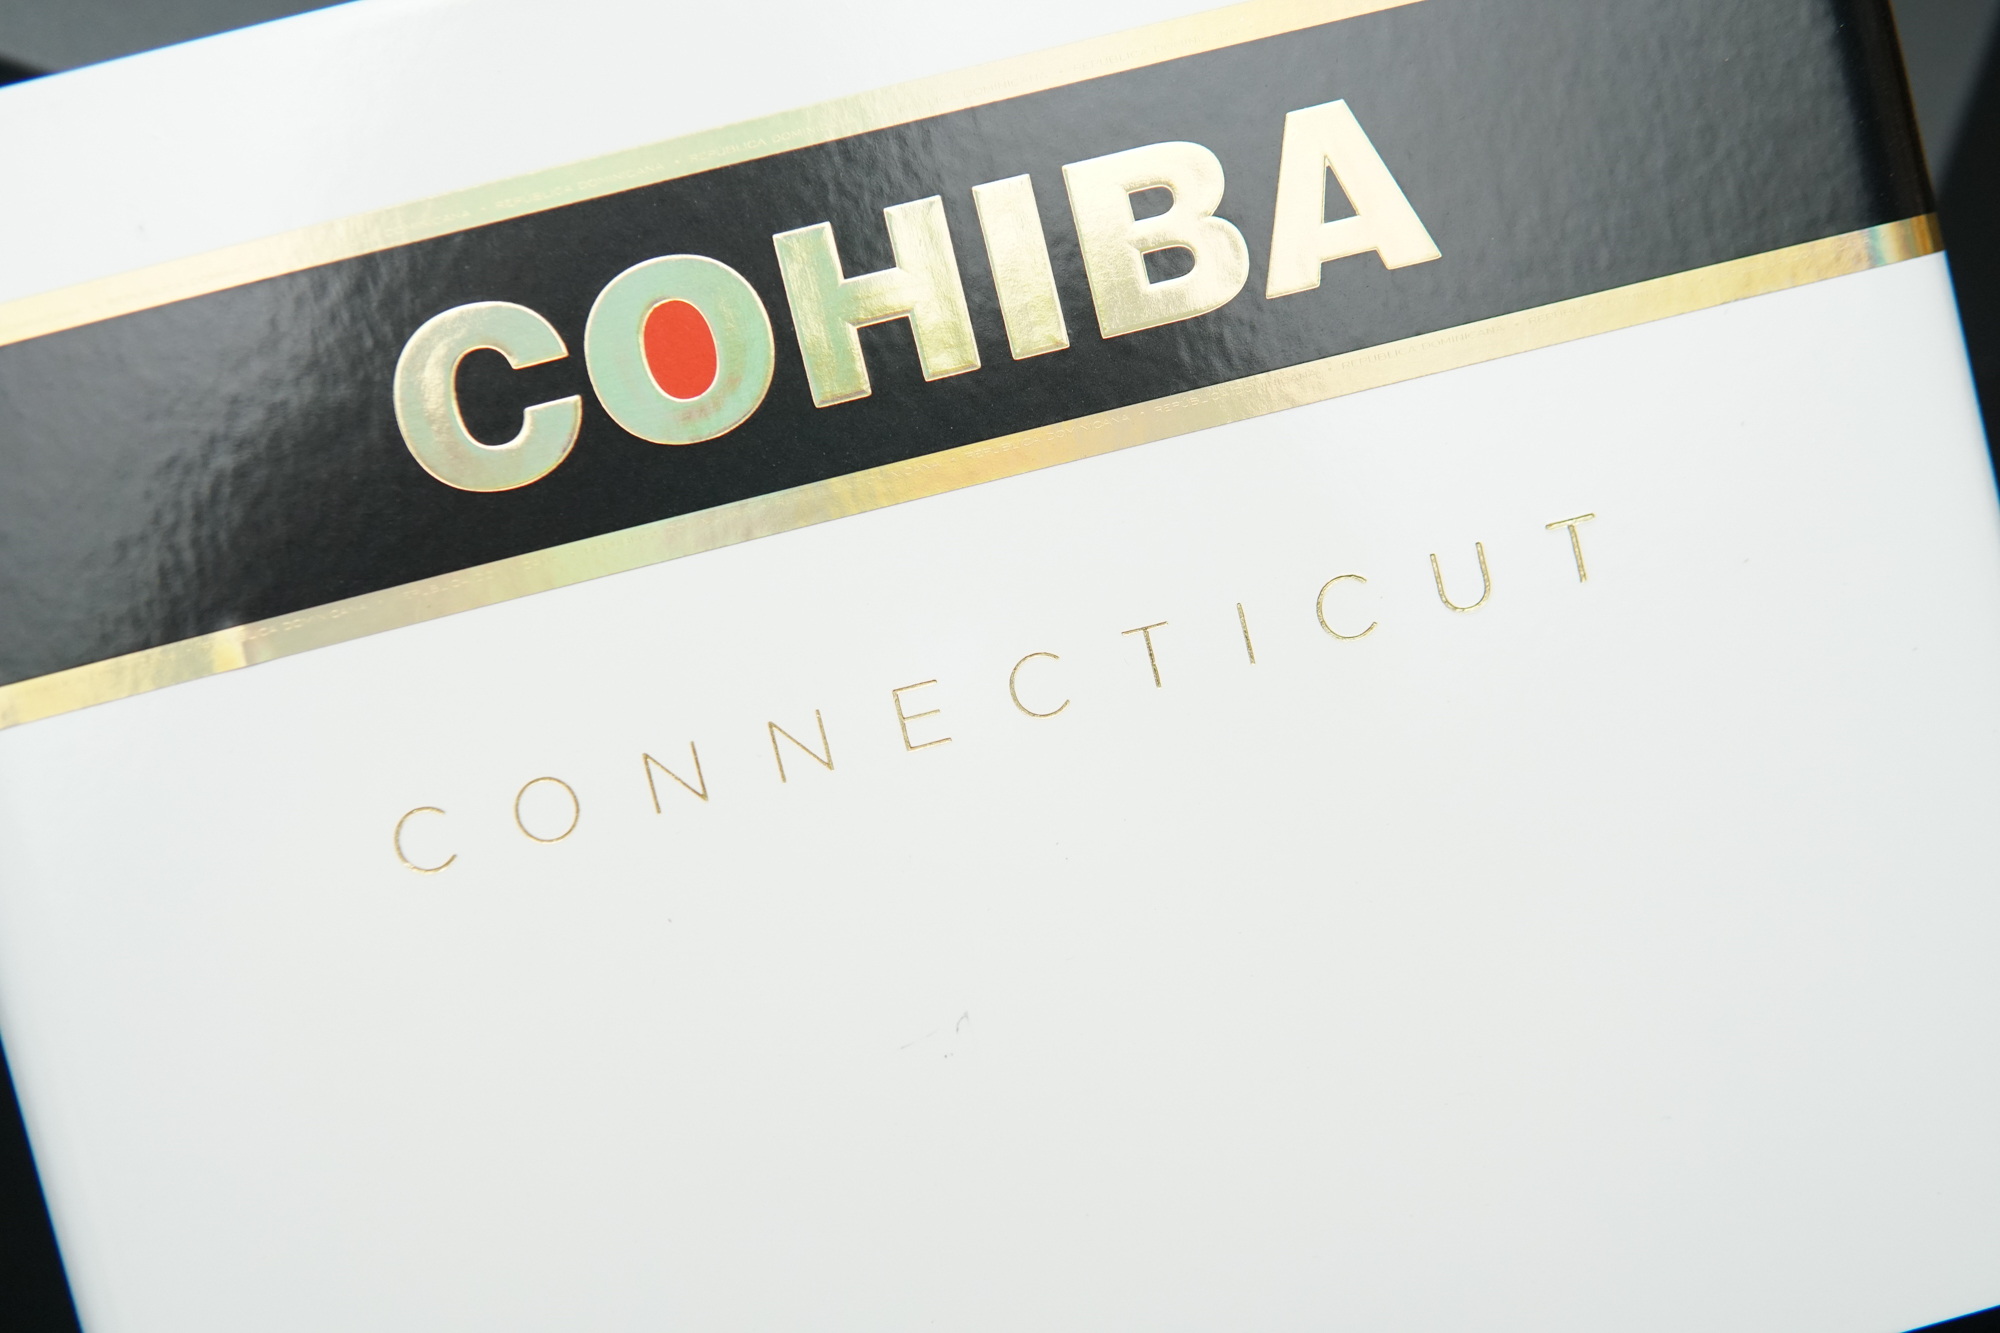 Cohiba Connecticut Cigar Box